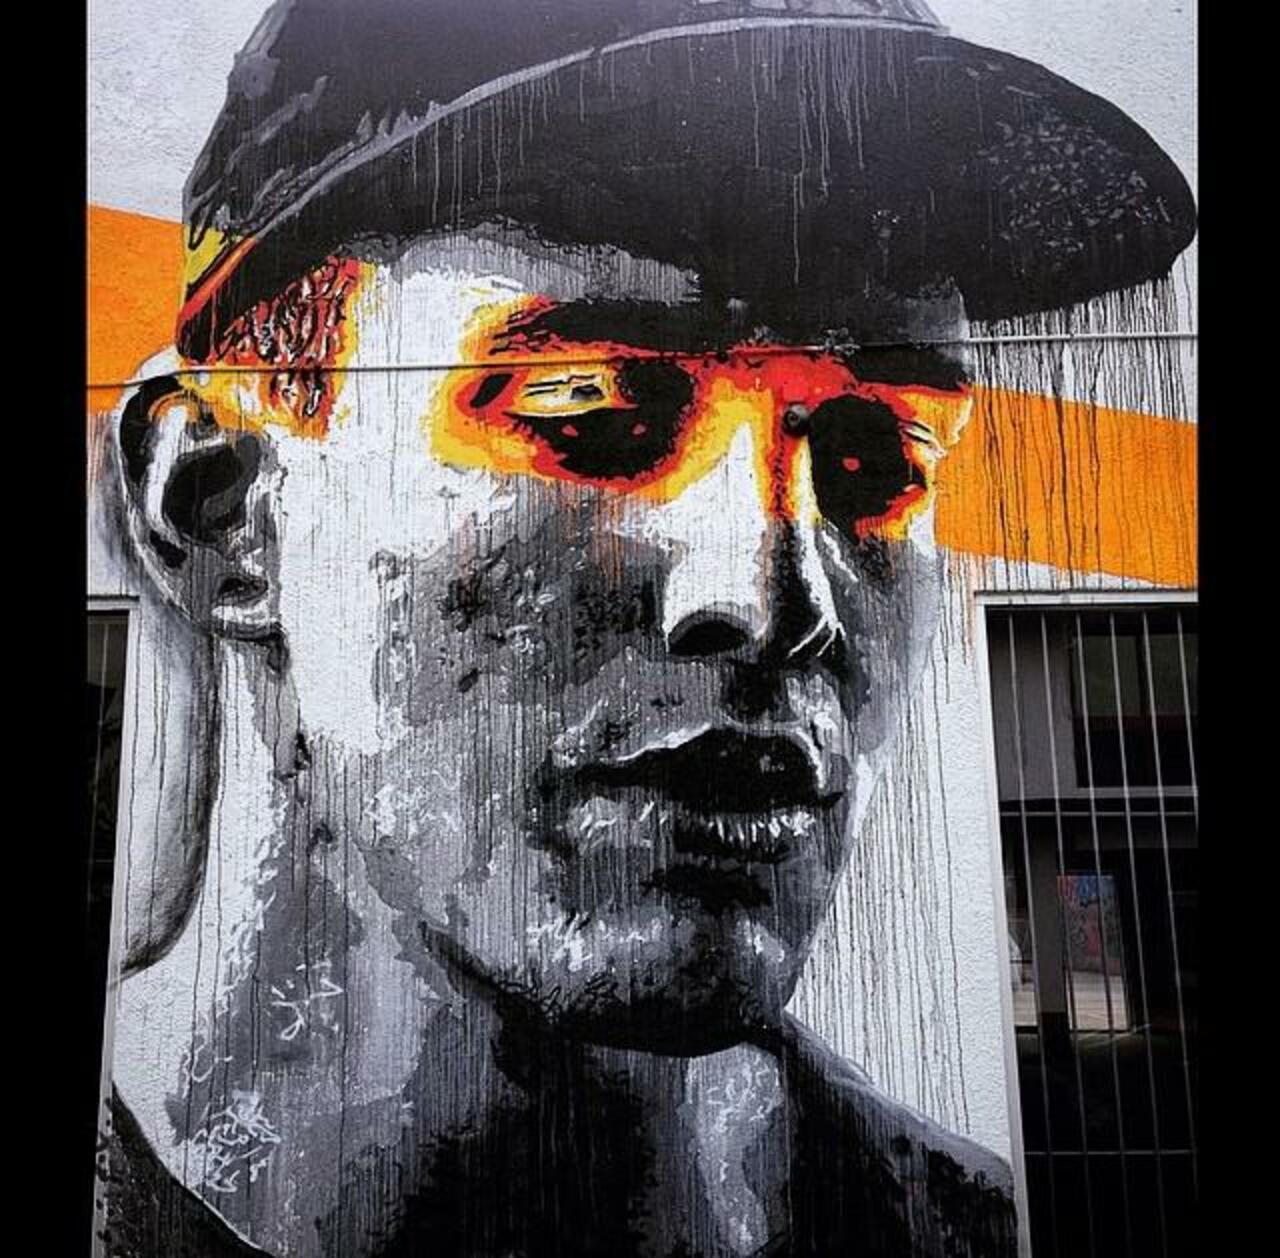 Artist Nils Westergard Street Art portrait in Miami 

#art #graffiti #mural #streetart http://t.co/5FnDpOGkOk